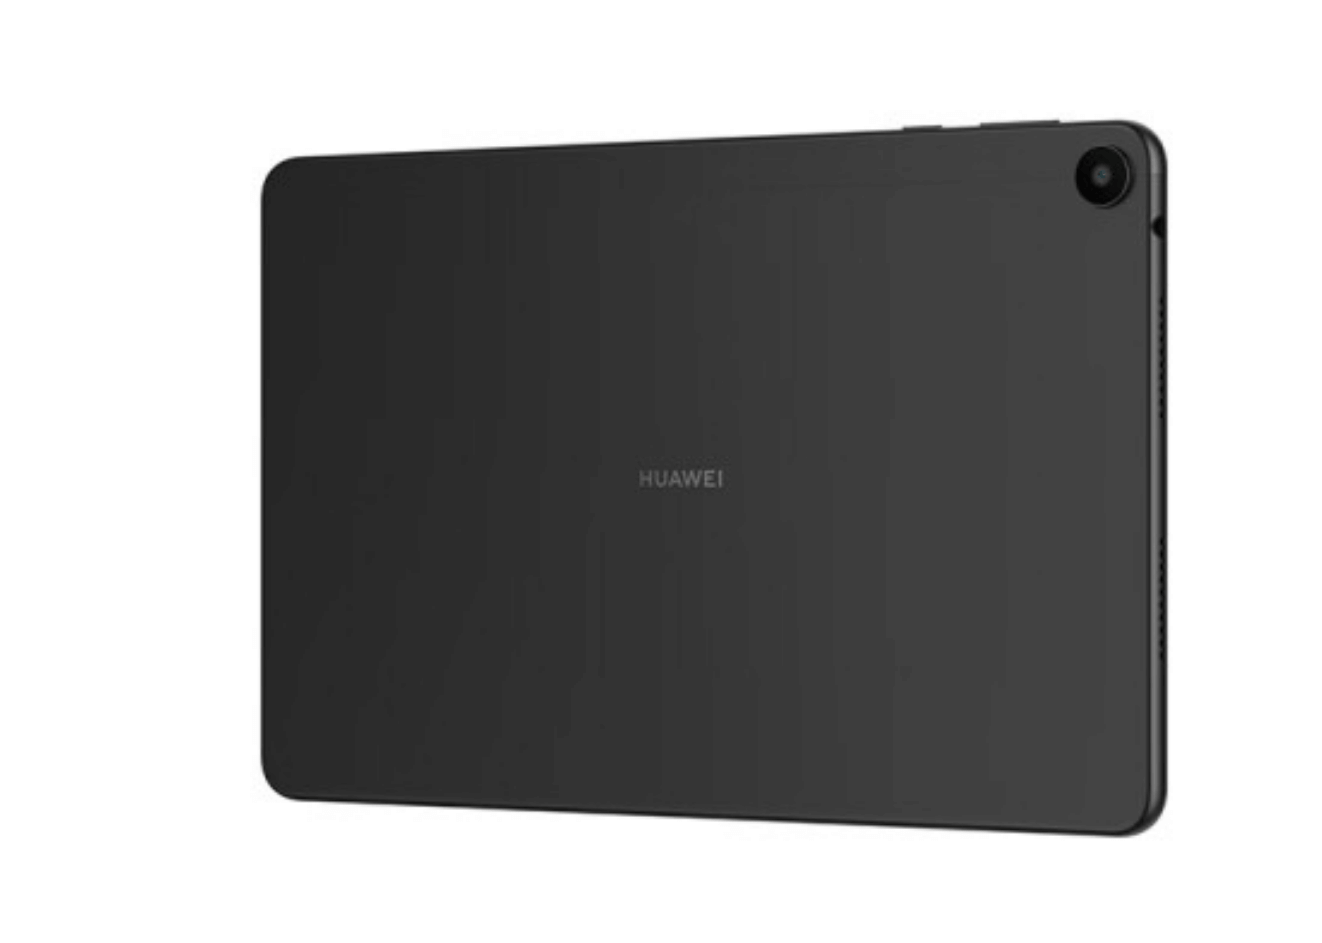 Huawei MatePad SE -  External Reviews